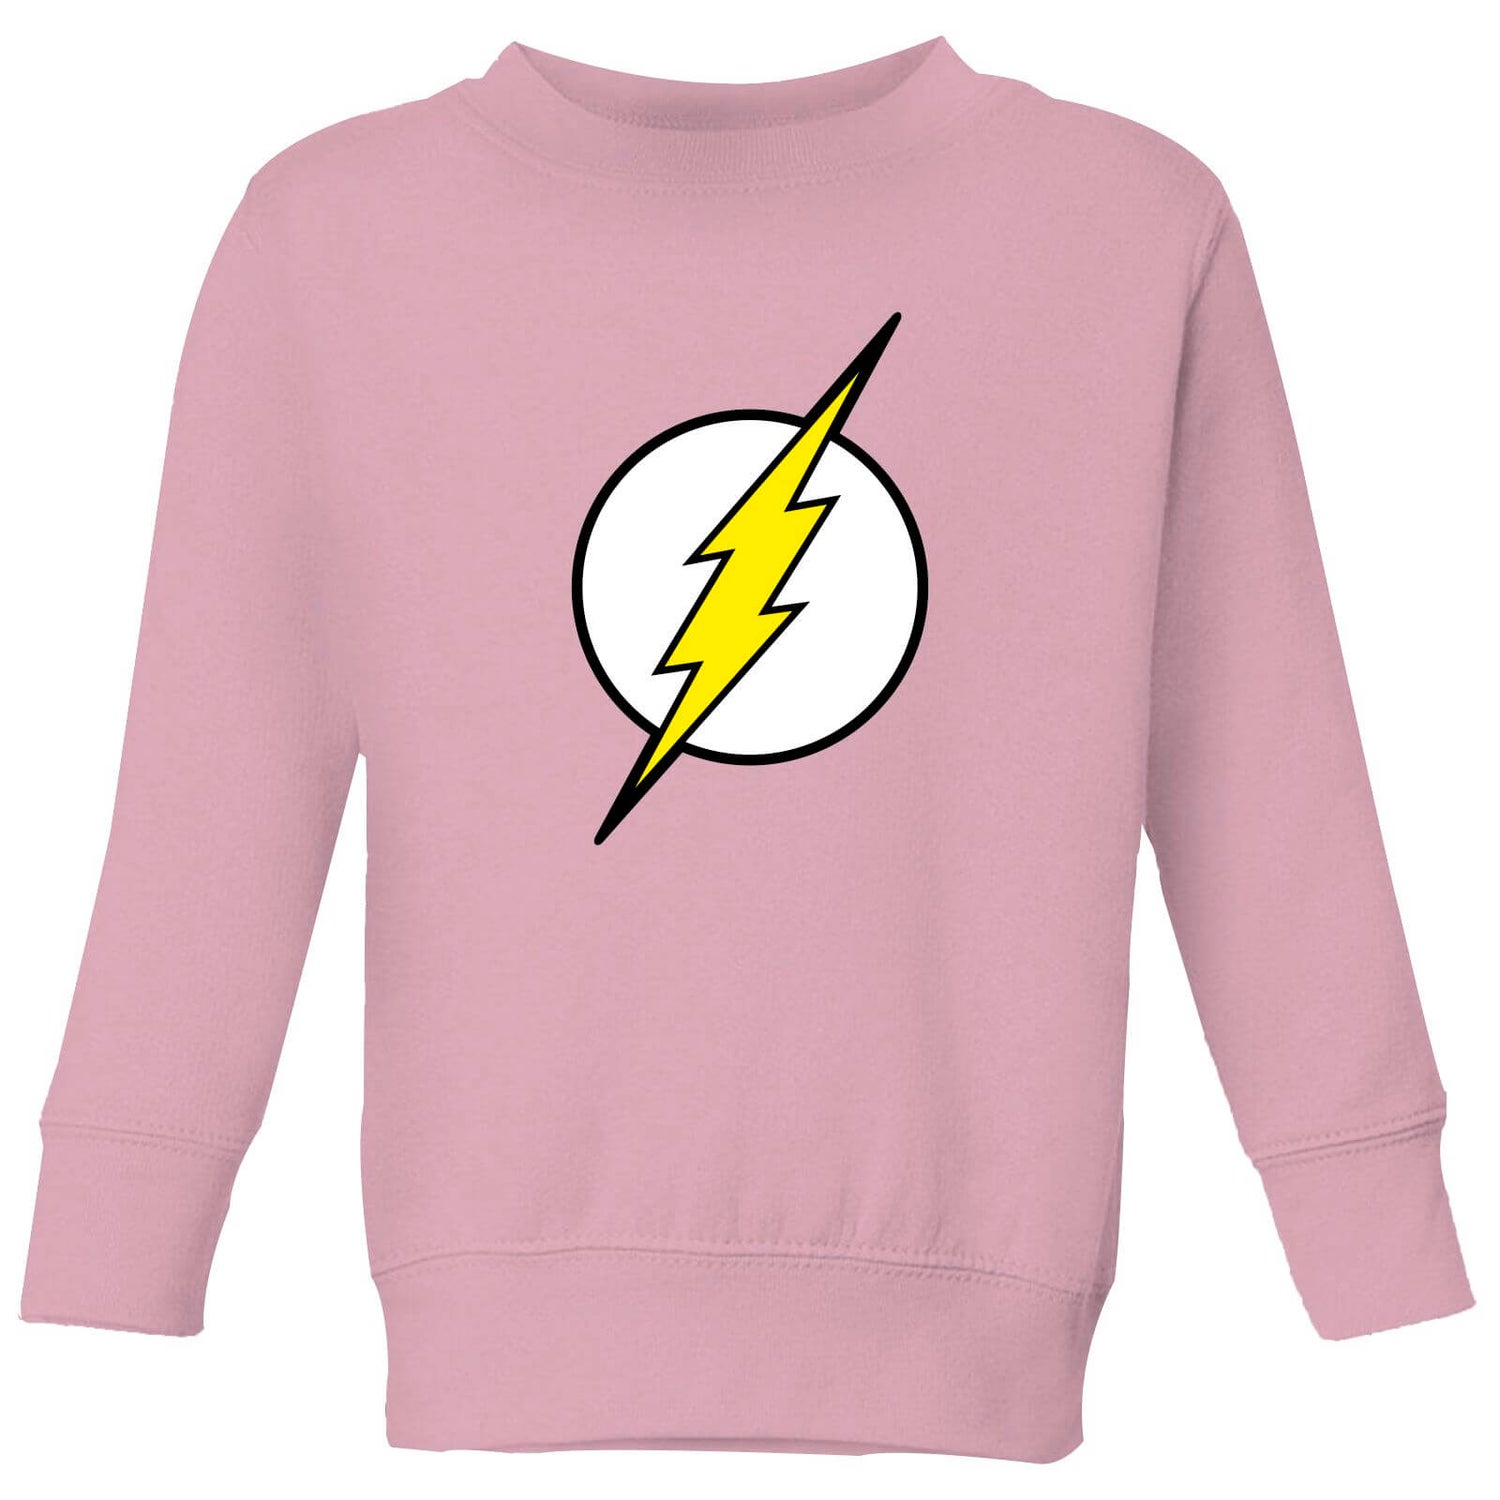 Justice League Flash Logo Kids' Sweatshirt - Baby Pink